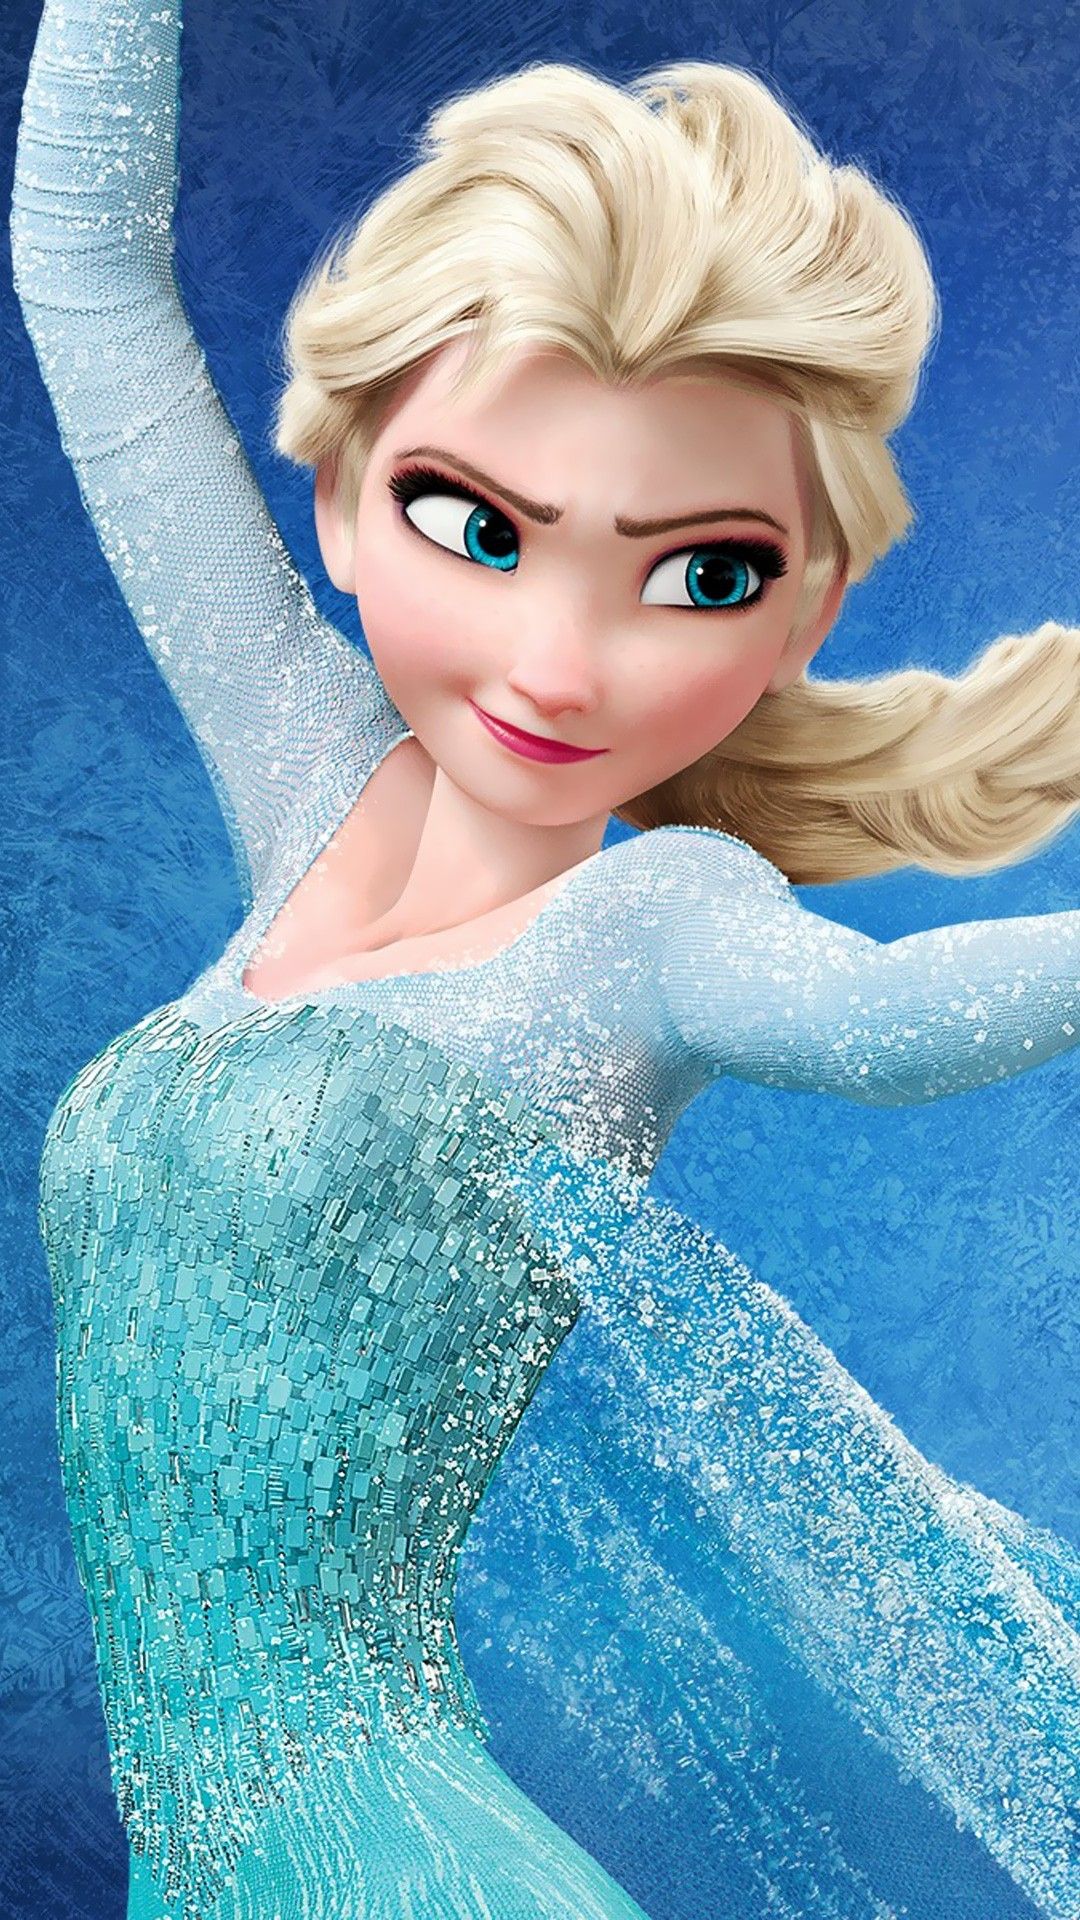 Elsa Frozen Wallpaper